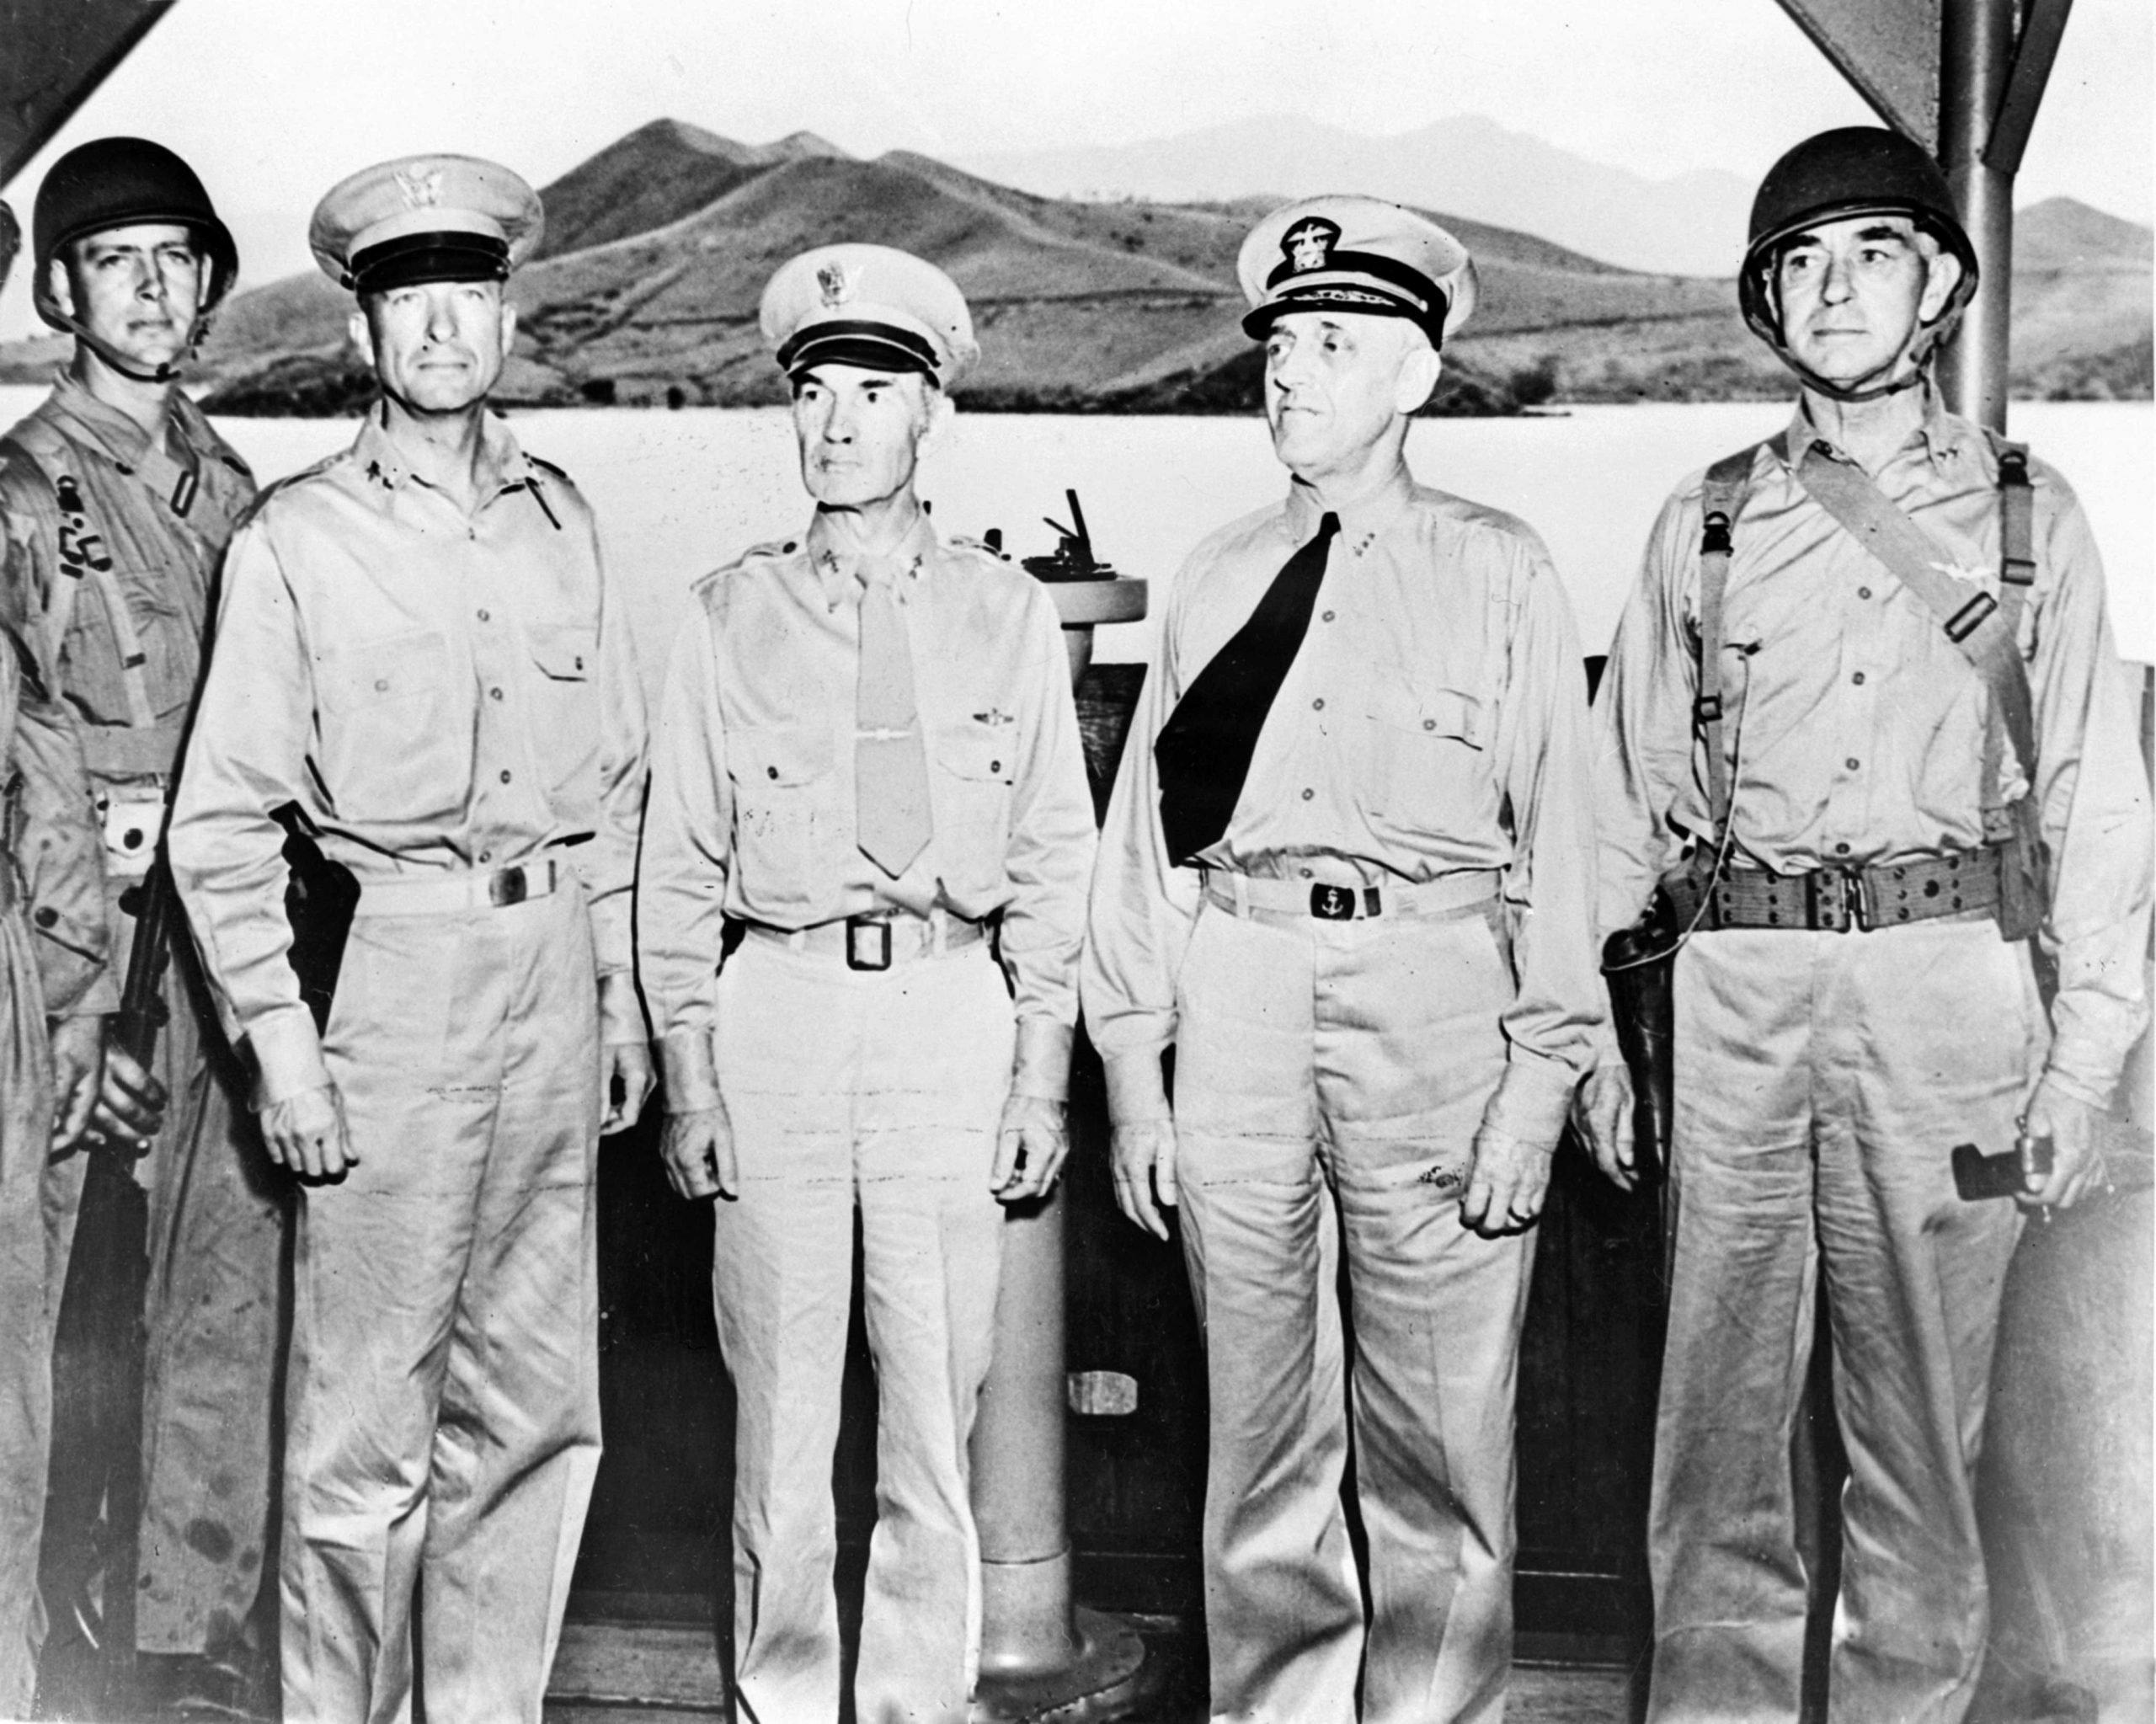 Group portrait of US senior officers